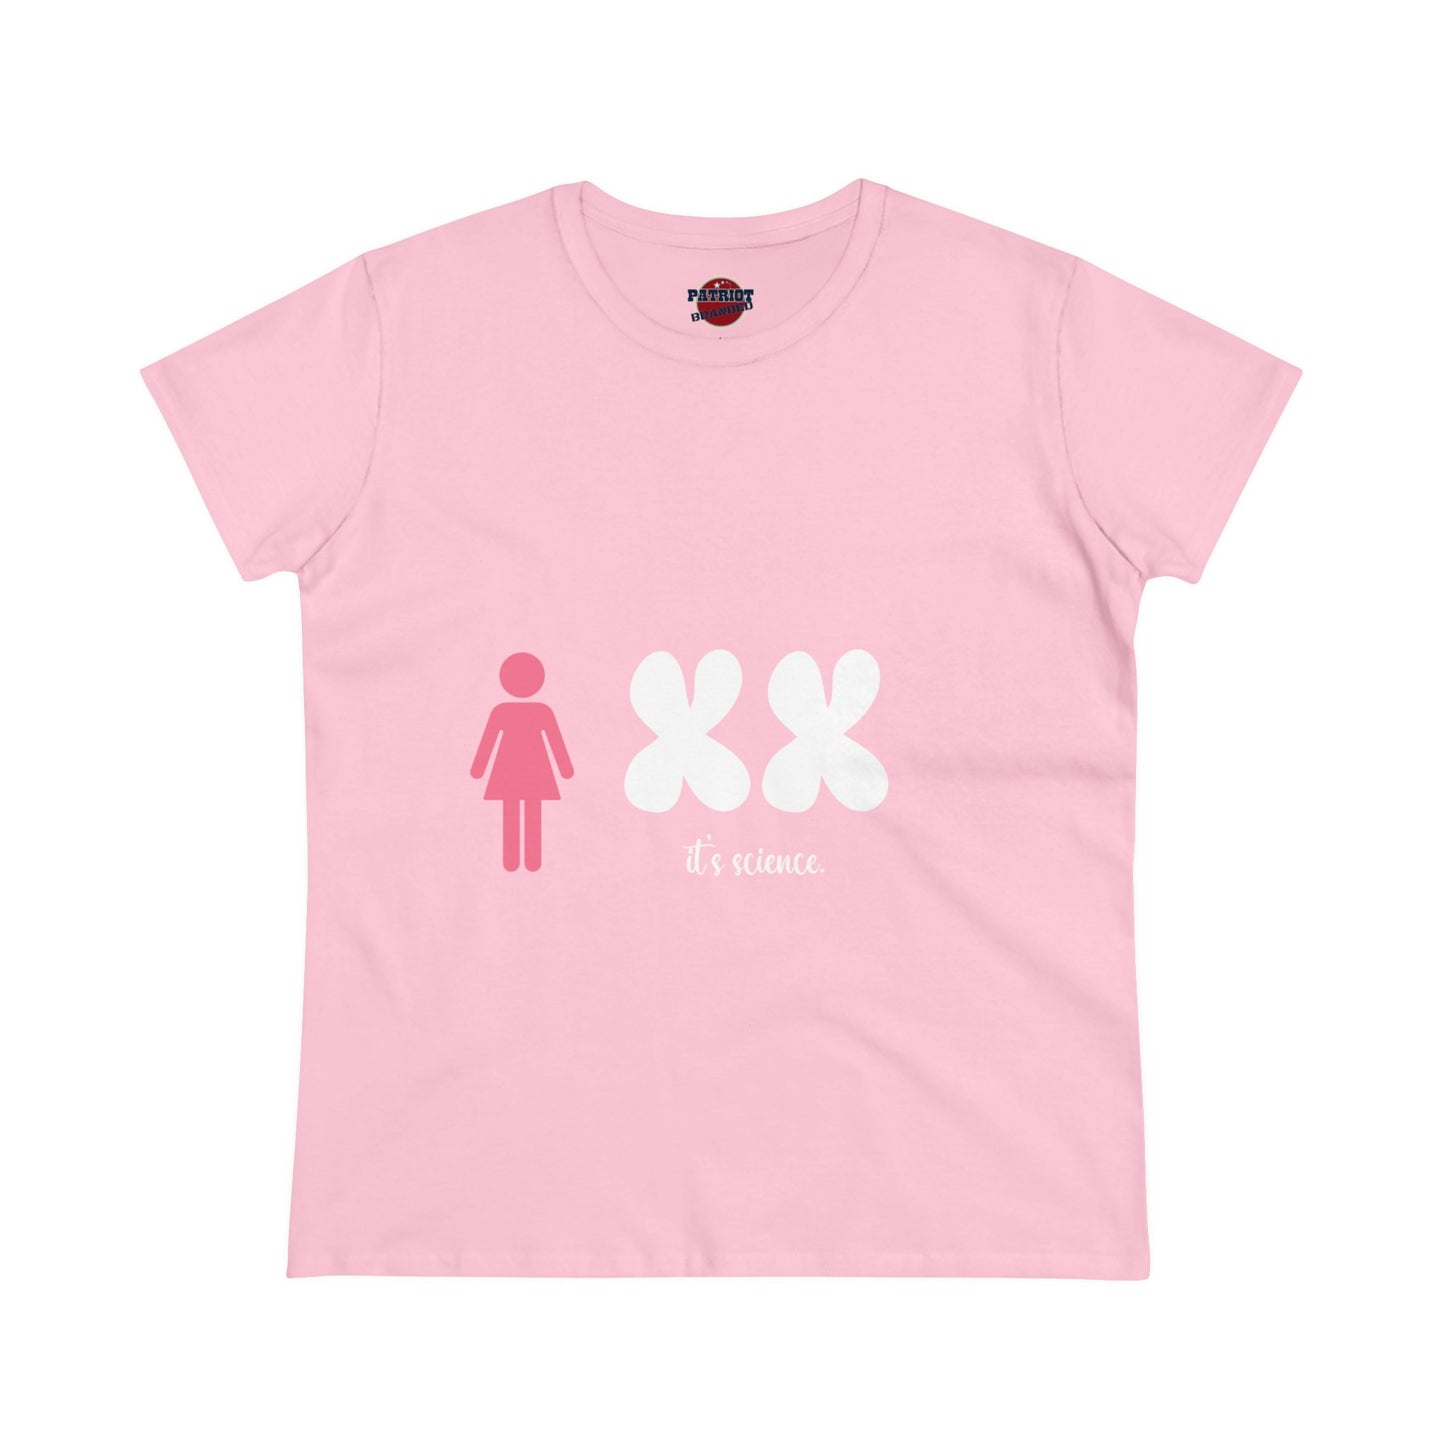 Women's Tee - XX: It's science T-Shirt